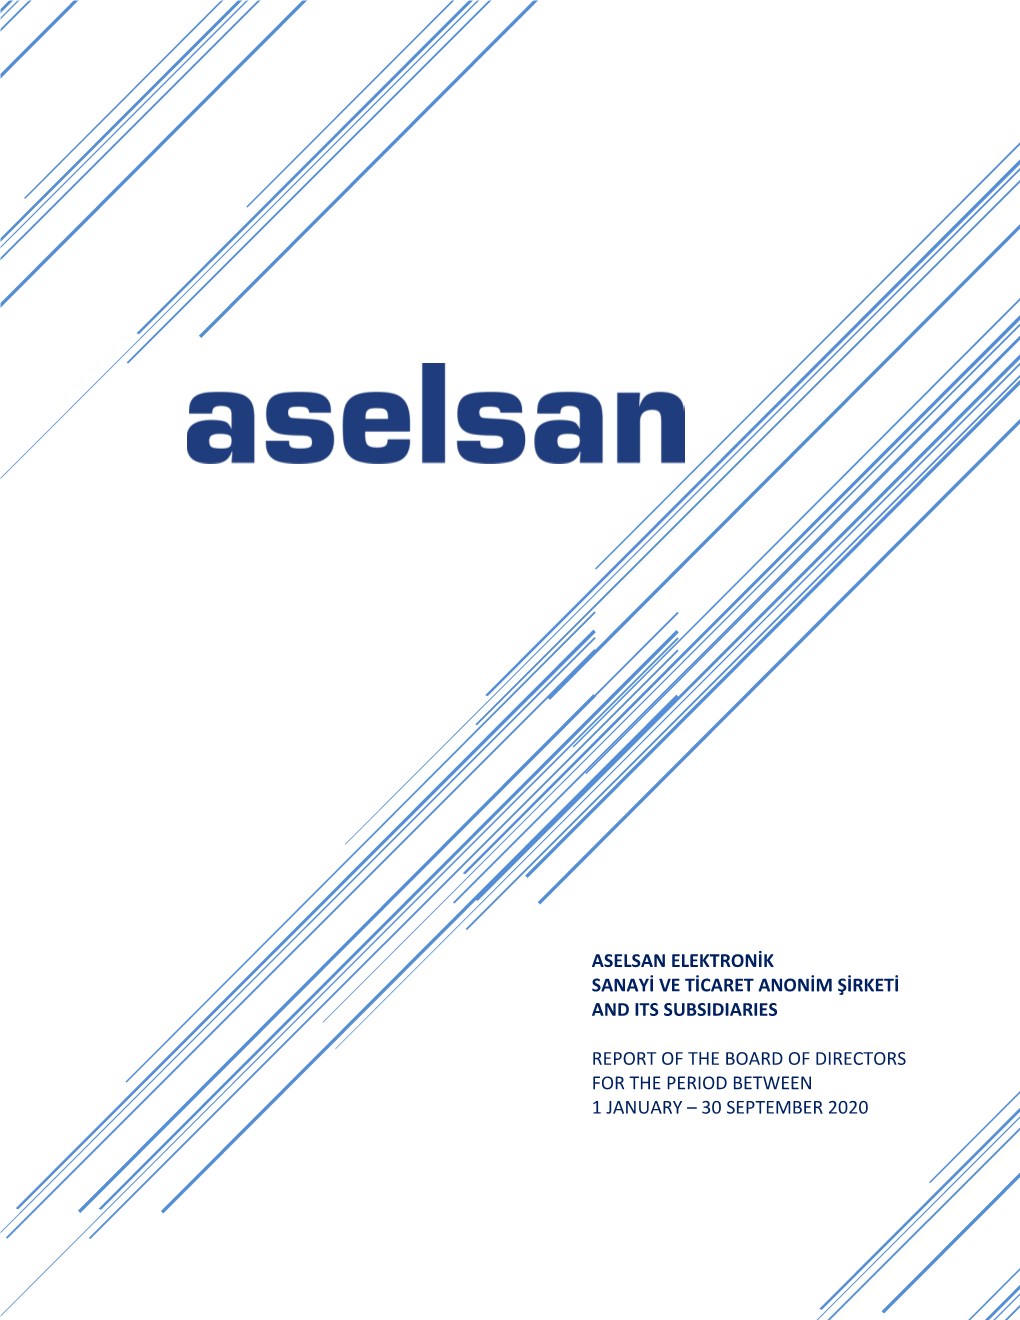 Aselsan Elektronik Sanayi Ve Ticaret Anonim Şirketi and Its Subsidiaries